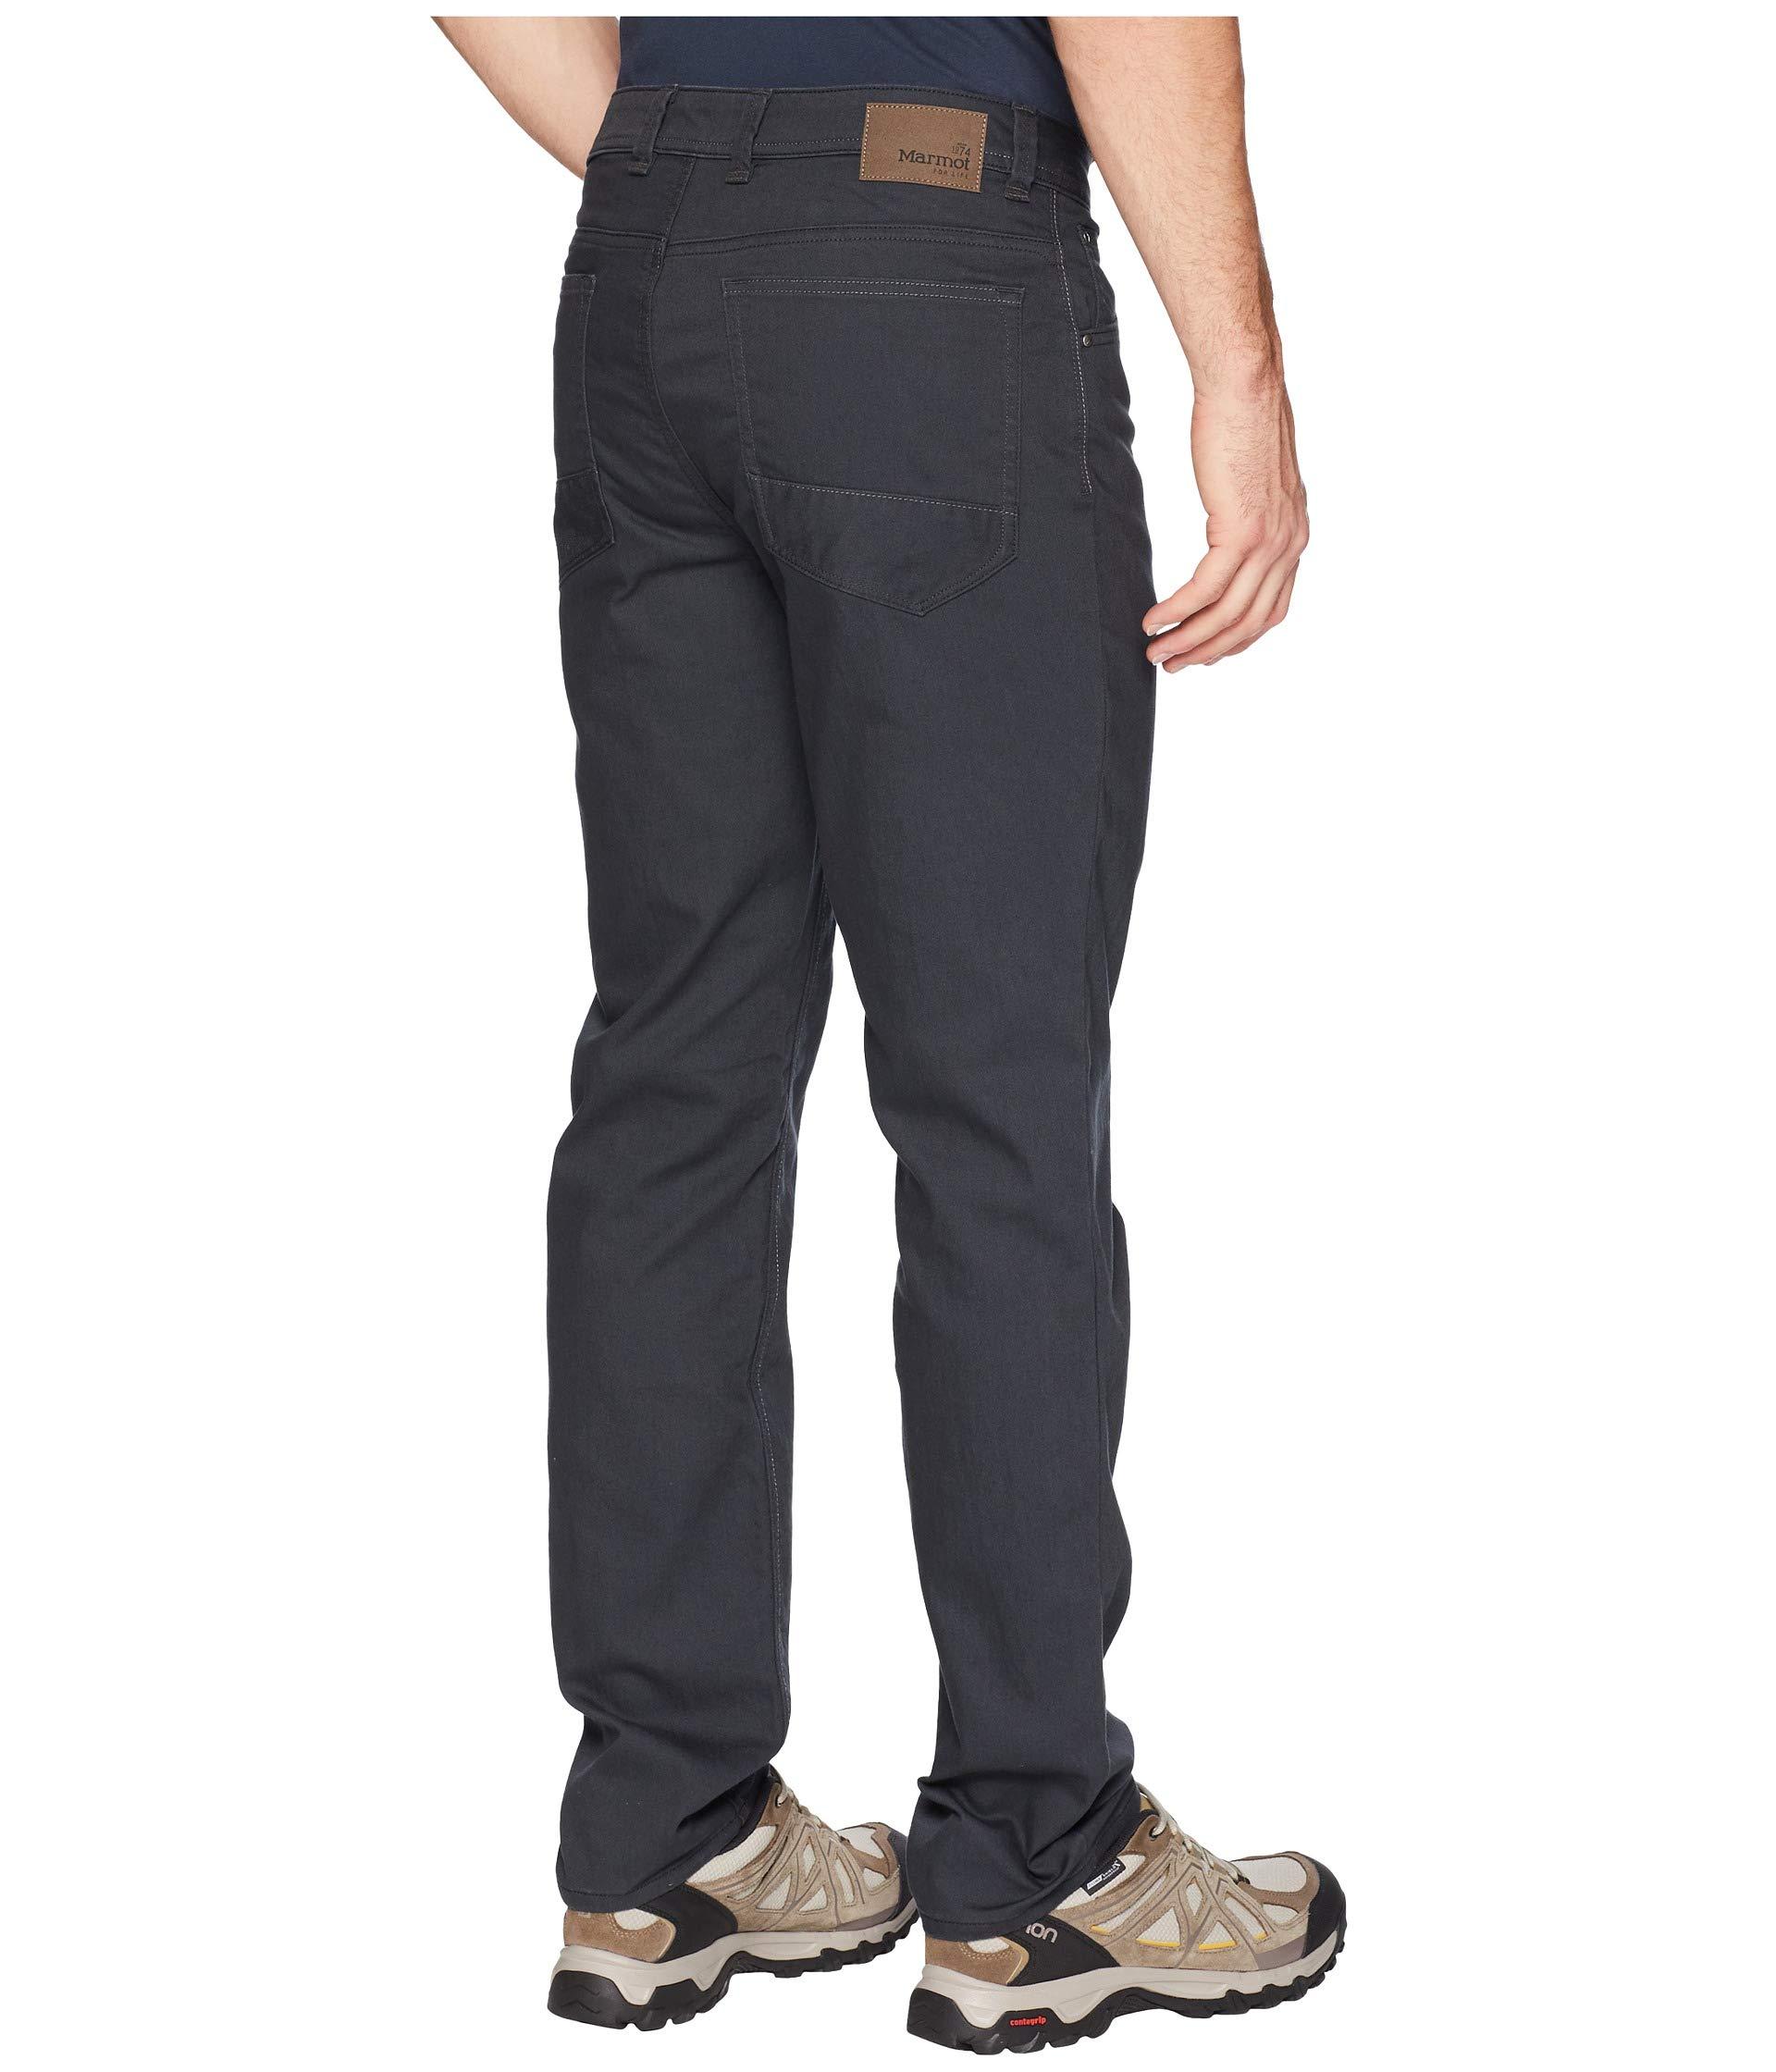 Marmot Denim Morrison Jeans in Brown for Men - Lyst